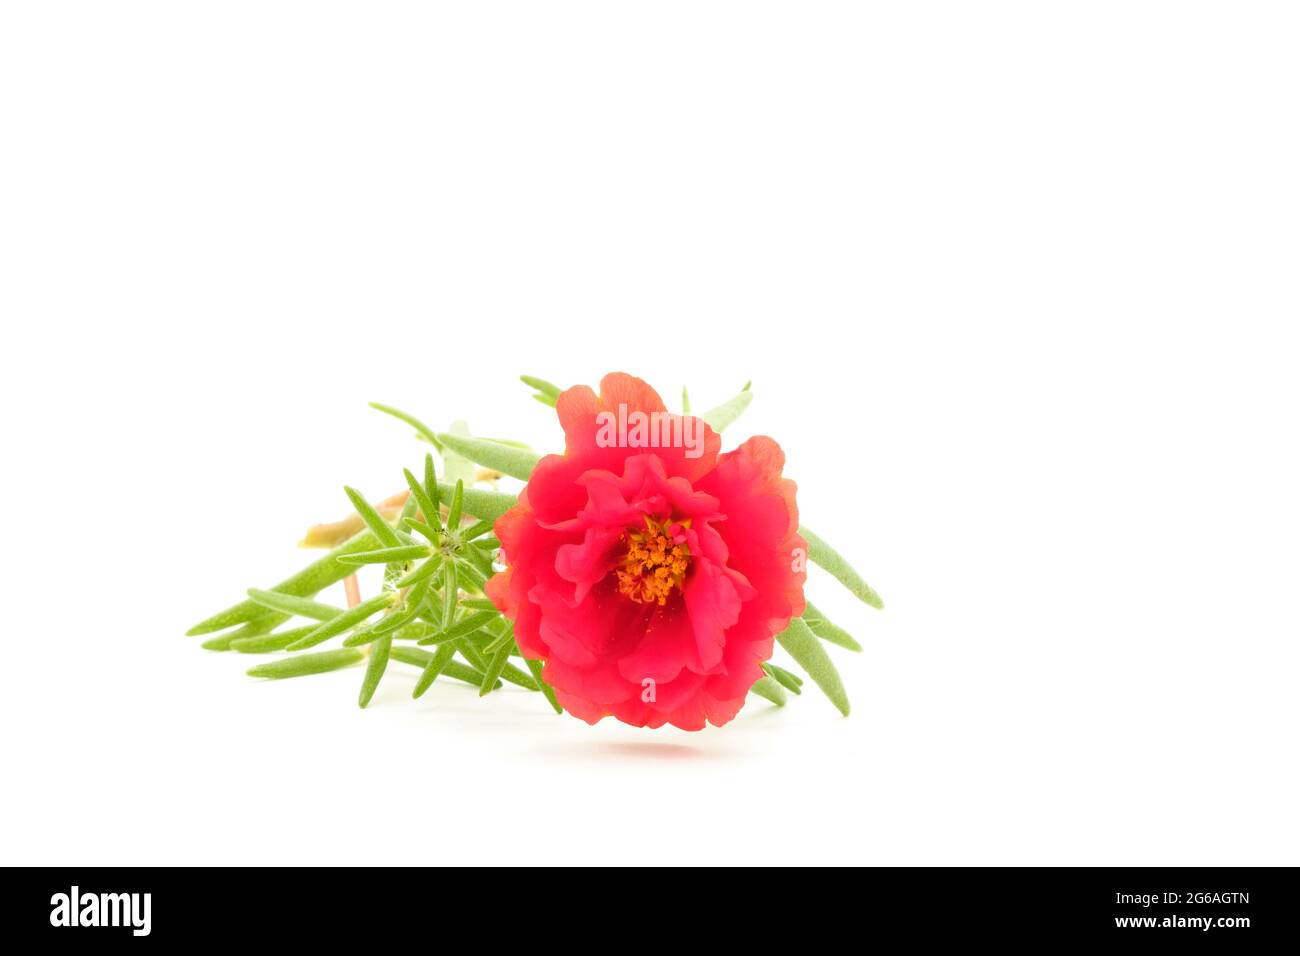 Rose colored portulaca, Portulaca grandiflora, photographed against a white background. Stock Photo